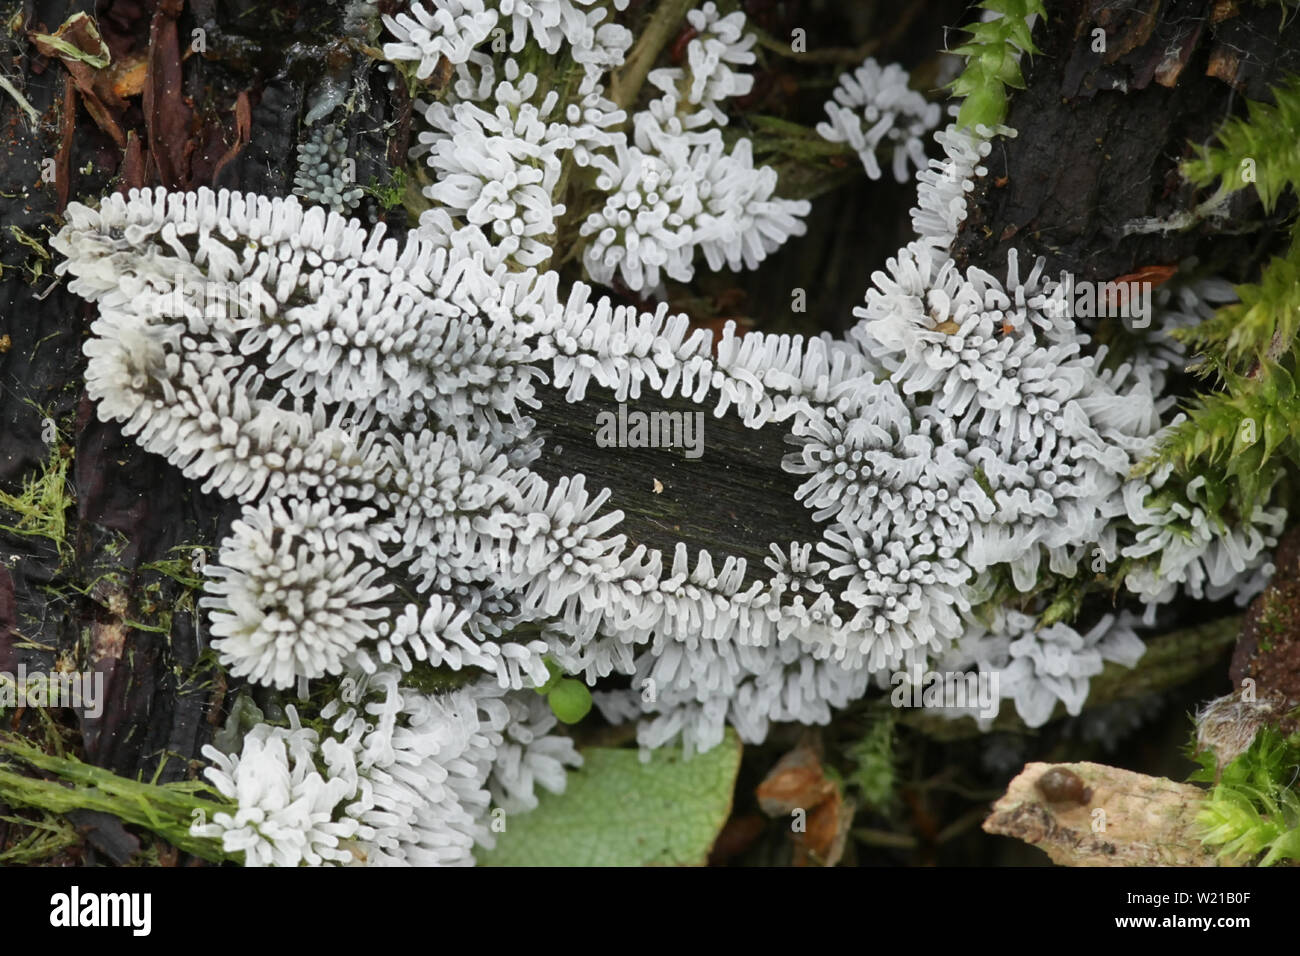 Sporangia of white coral slime mold, Ceratiomyxa fructiculosa Stock Photo